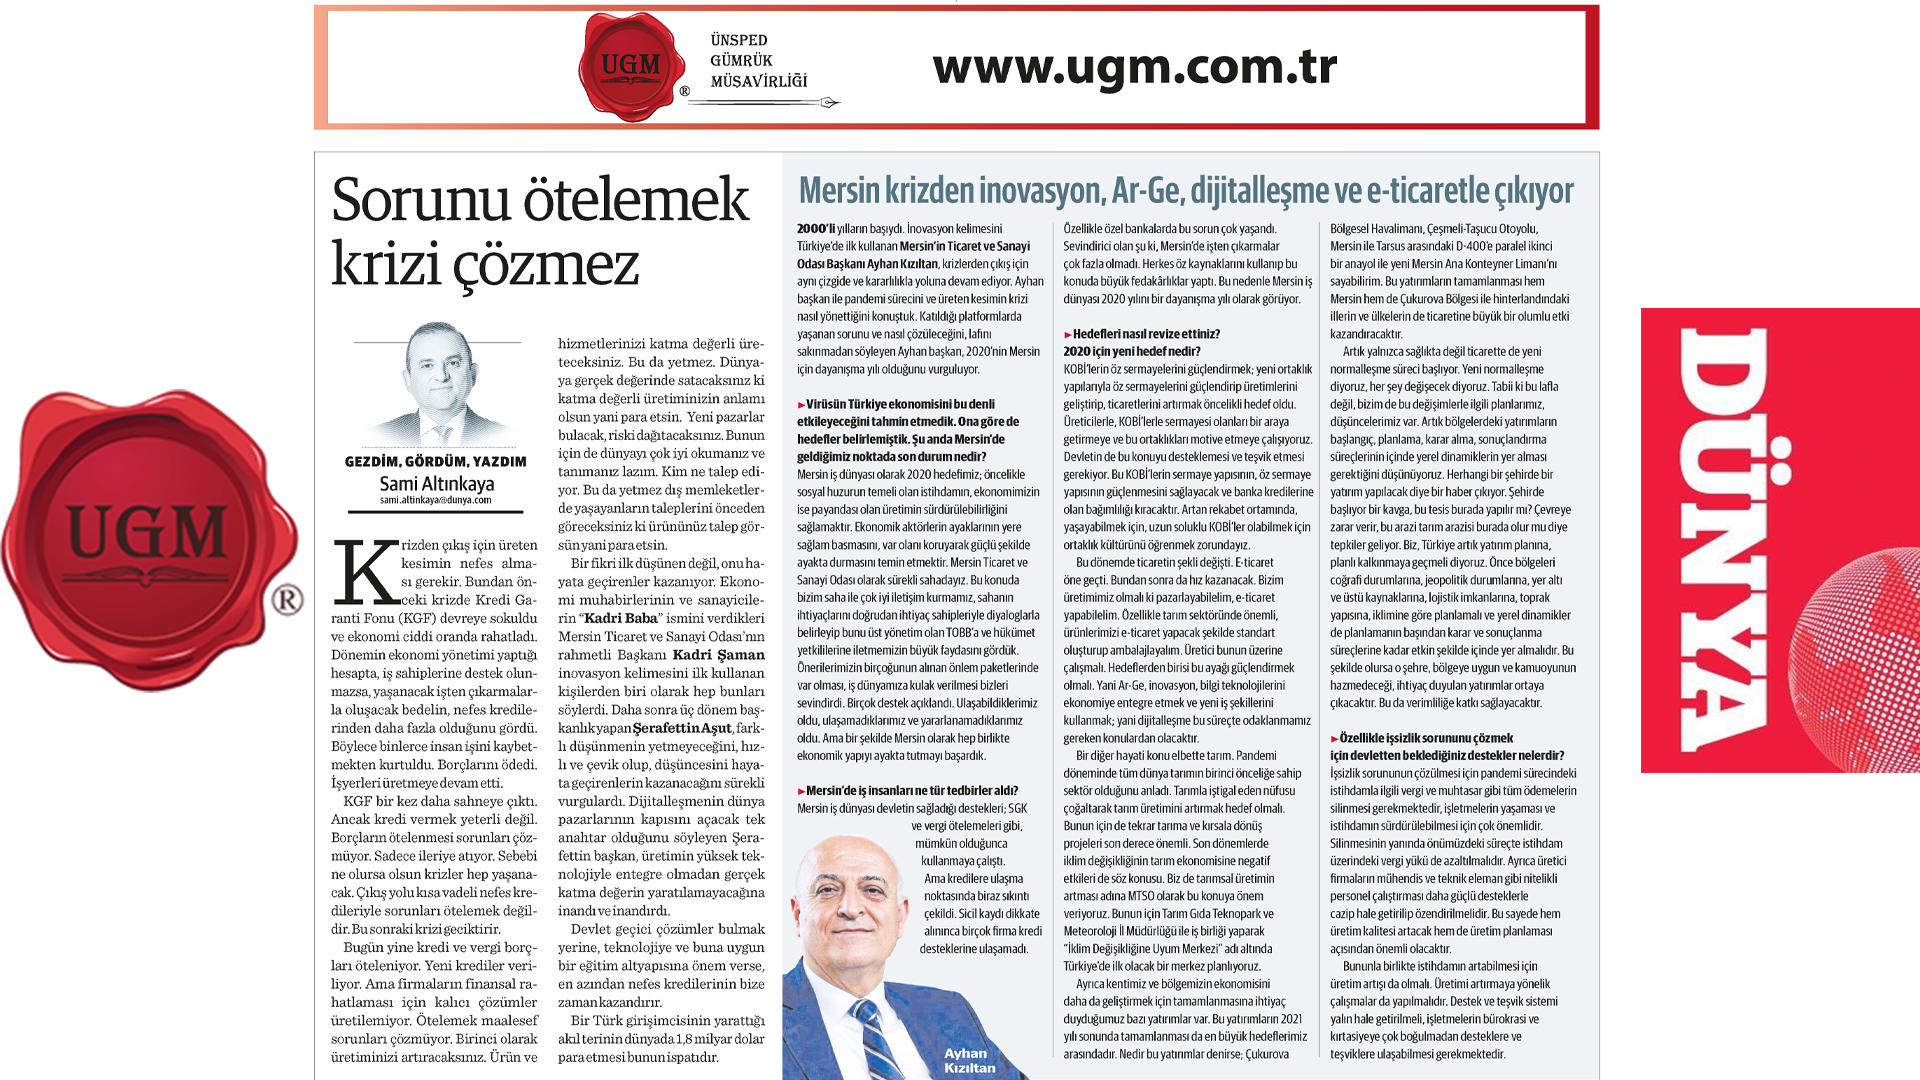 Our UGM Corporate Communication Director Sami Altınkaya's article titled "Postponing the problem does not 